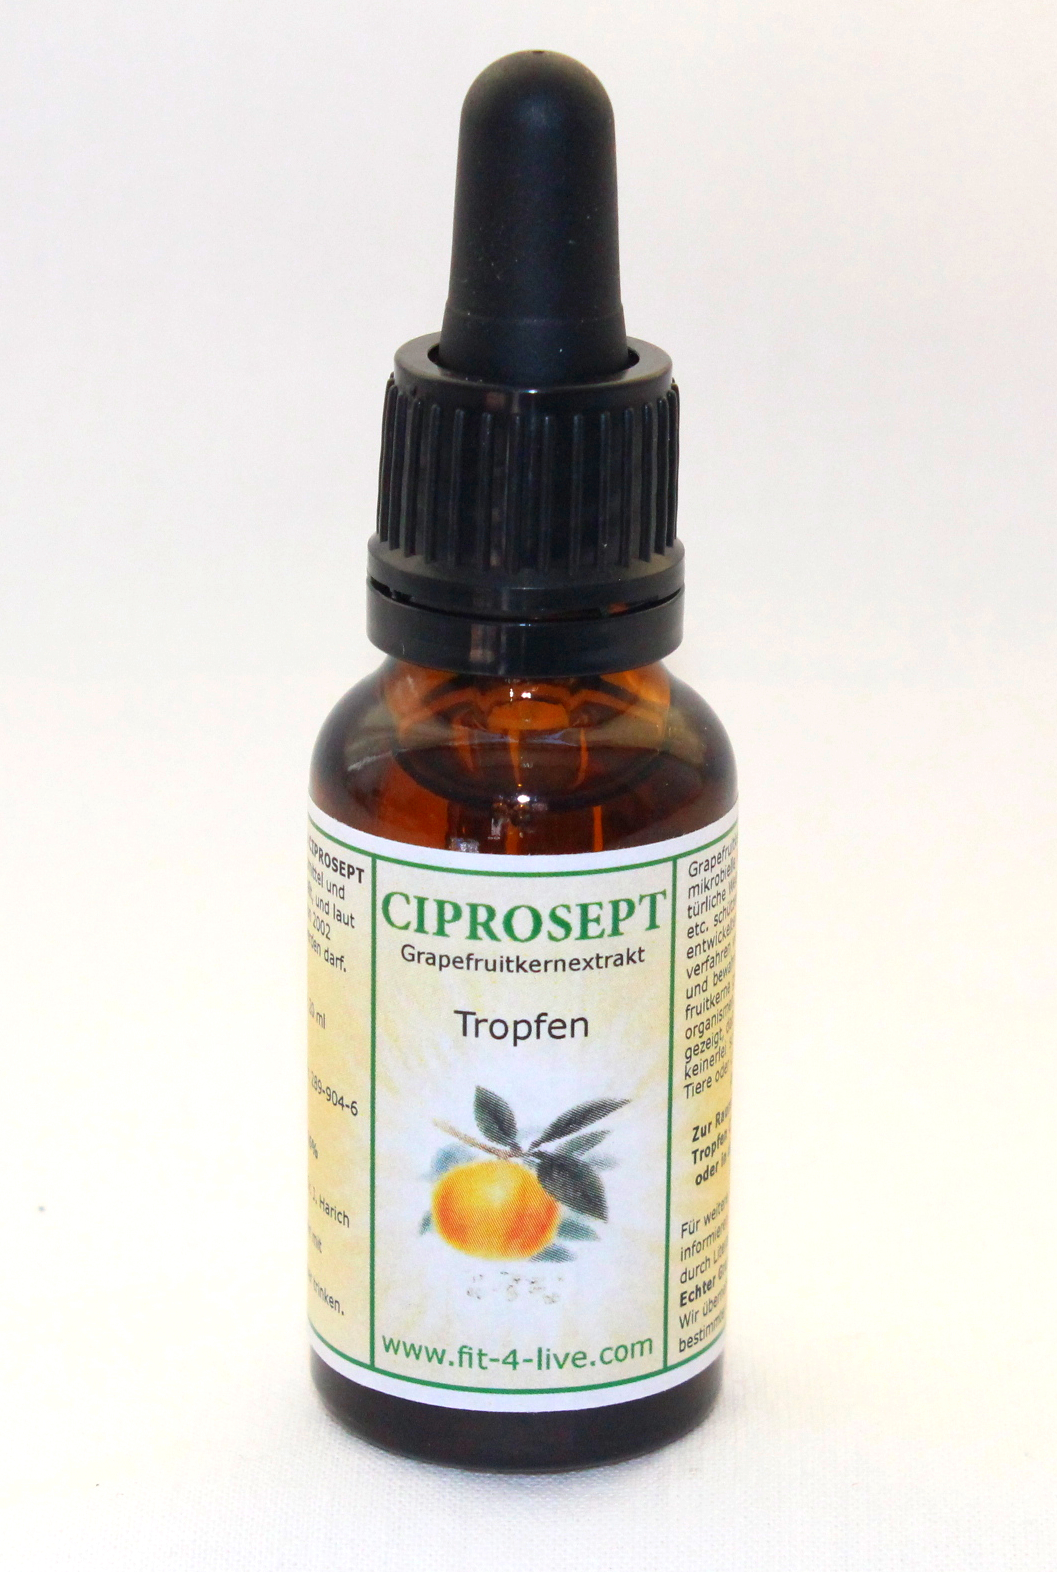 CIPROSEPT Konzentrat 20ml Grapefruitkernextrakt Dr. Harich